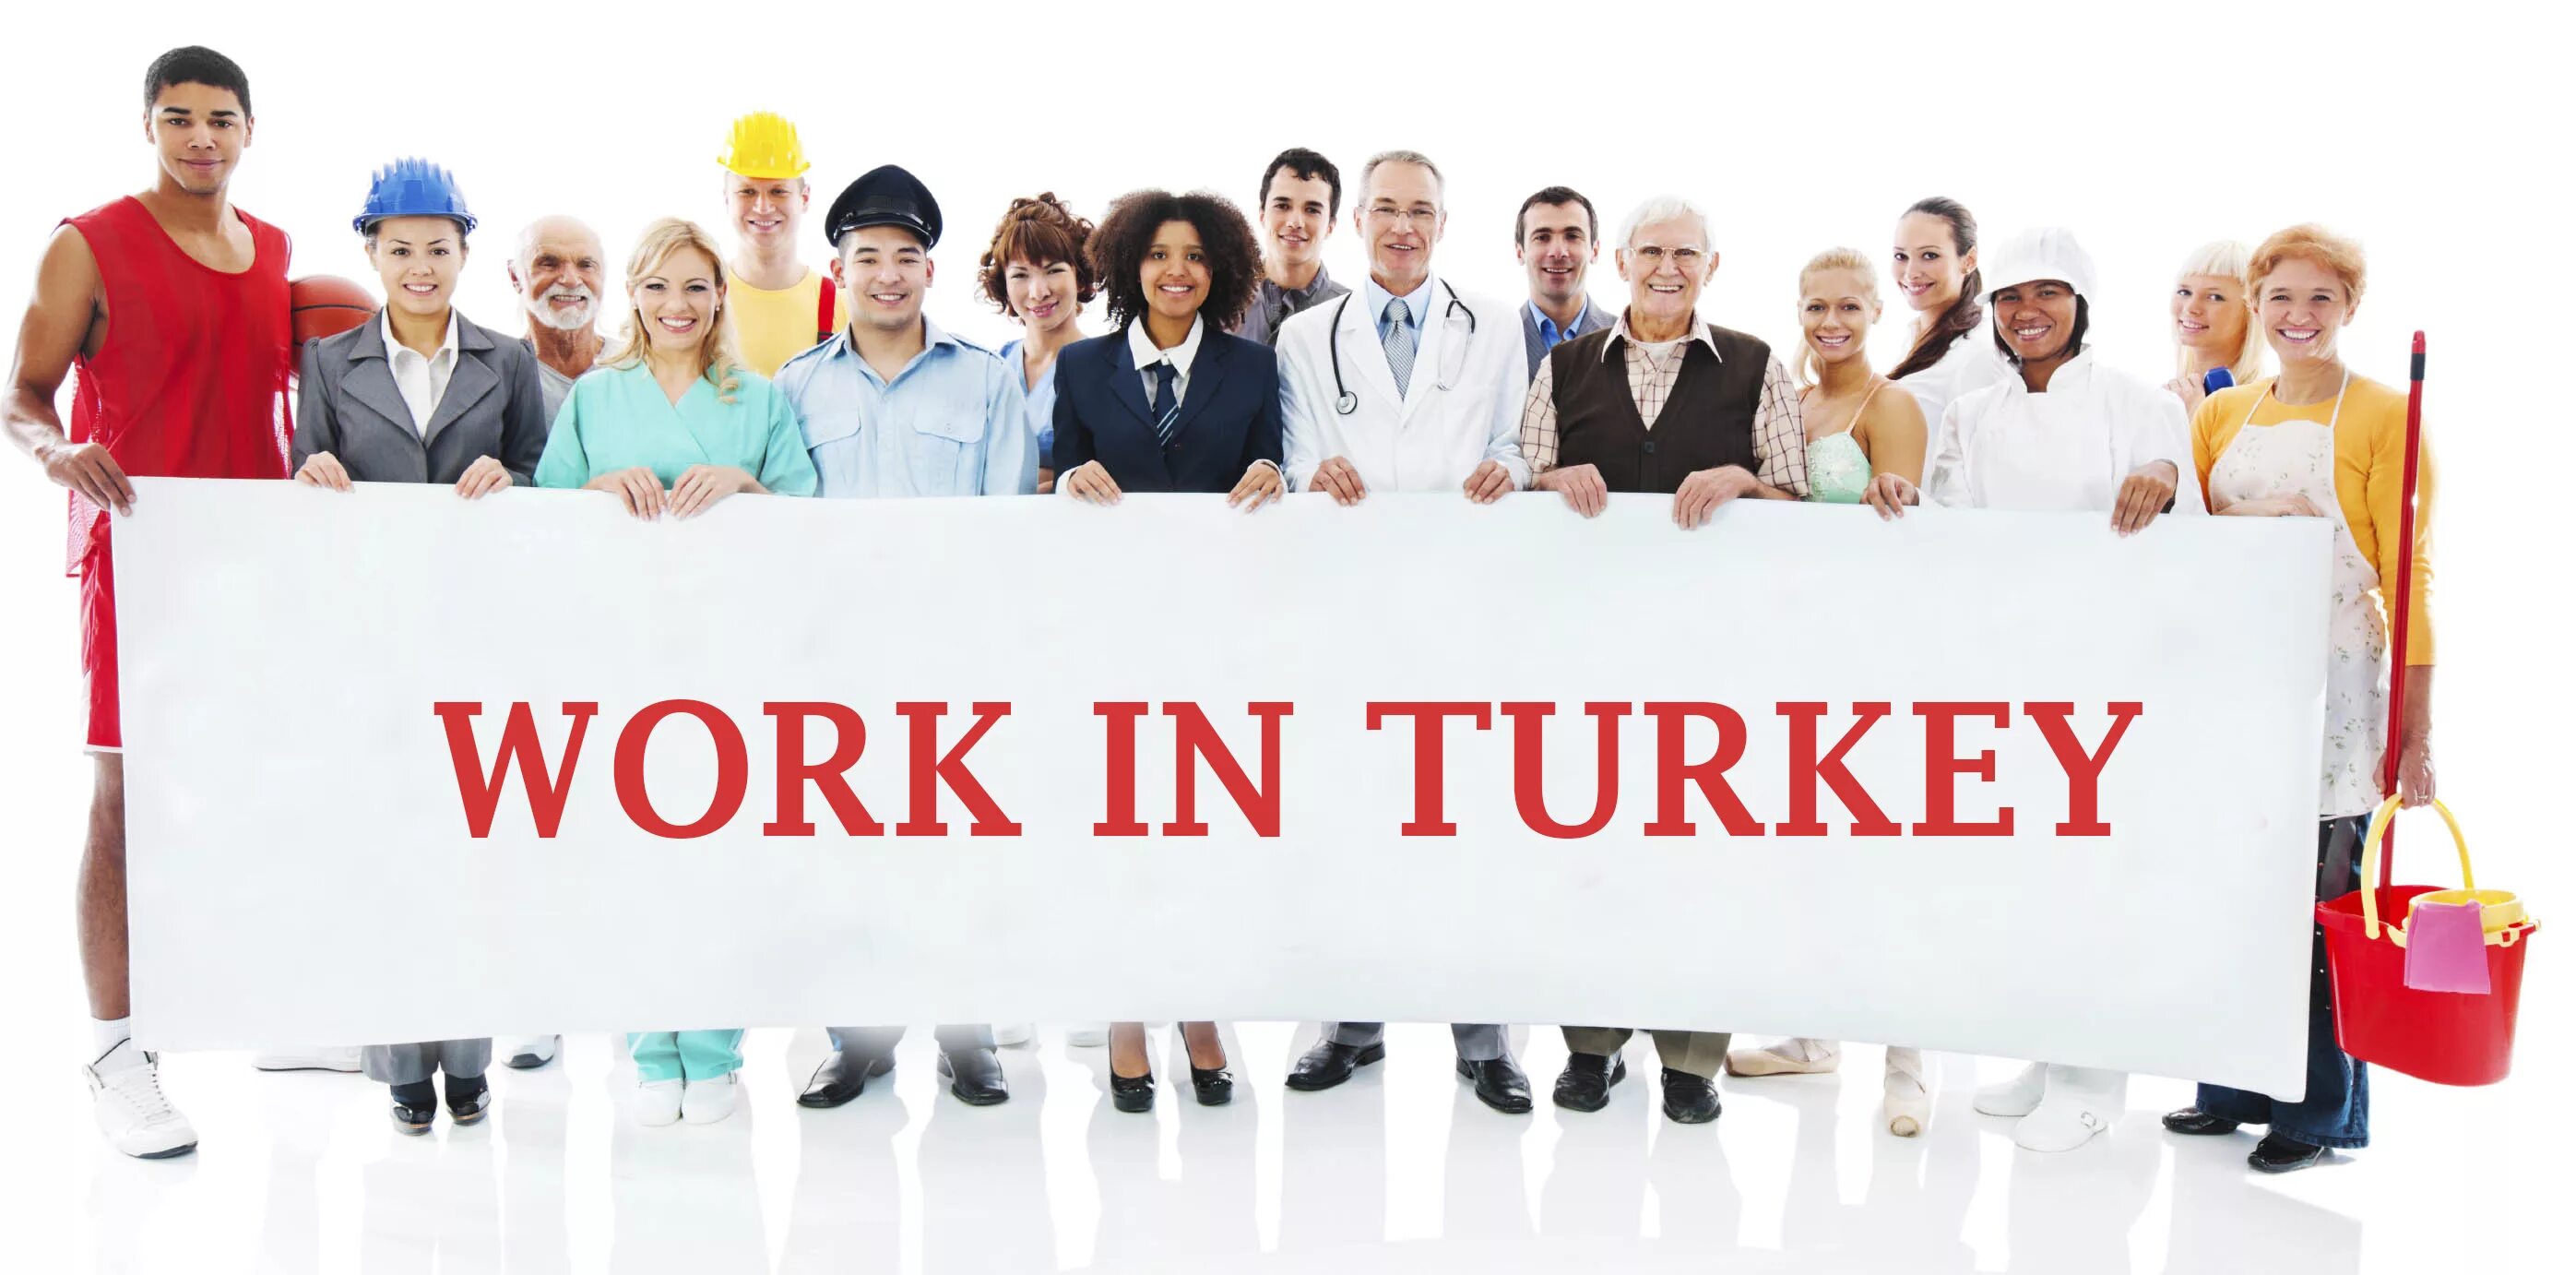 Work turkey. Turkey work. Баннер работа в Турции. Work permit. Работа в турецкой компании.